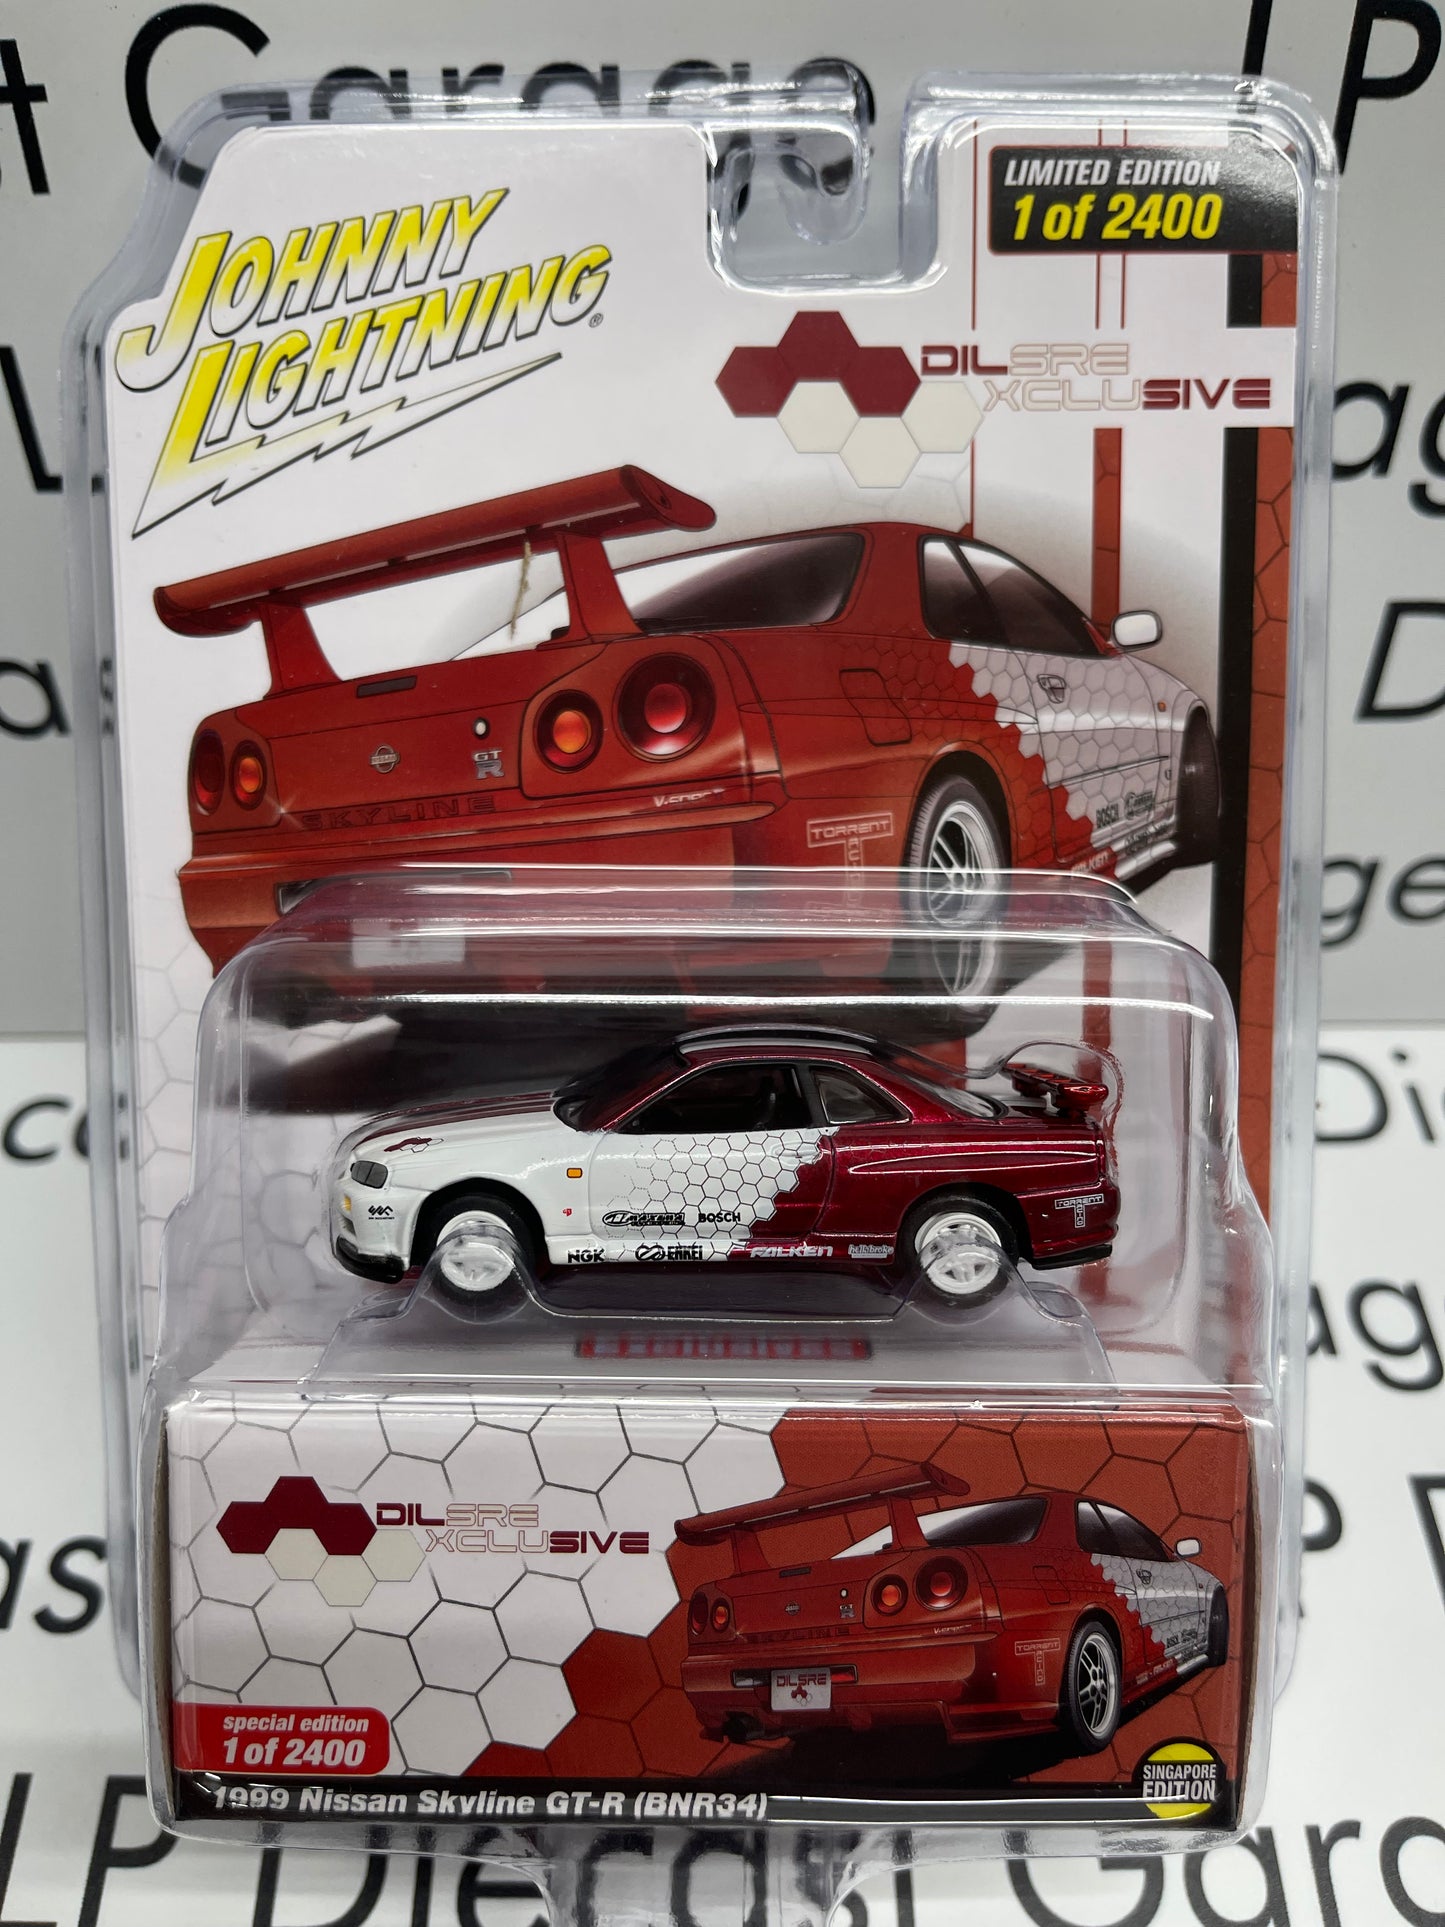 JOHNNY LIGHTNING 1999 Nissan Skyline GT-R R34 Singapore Dilsre Exclusive 1:64 Diecast